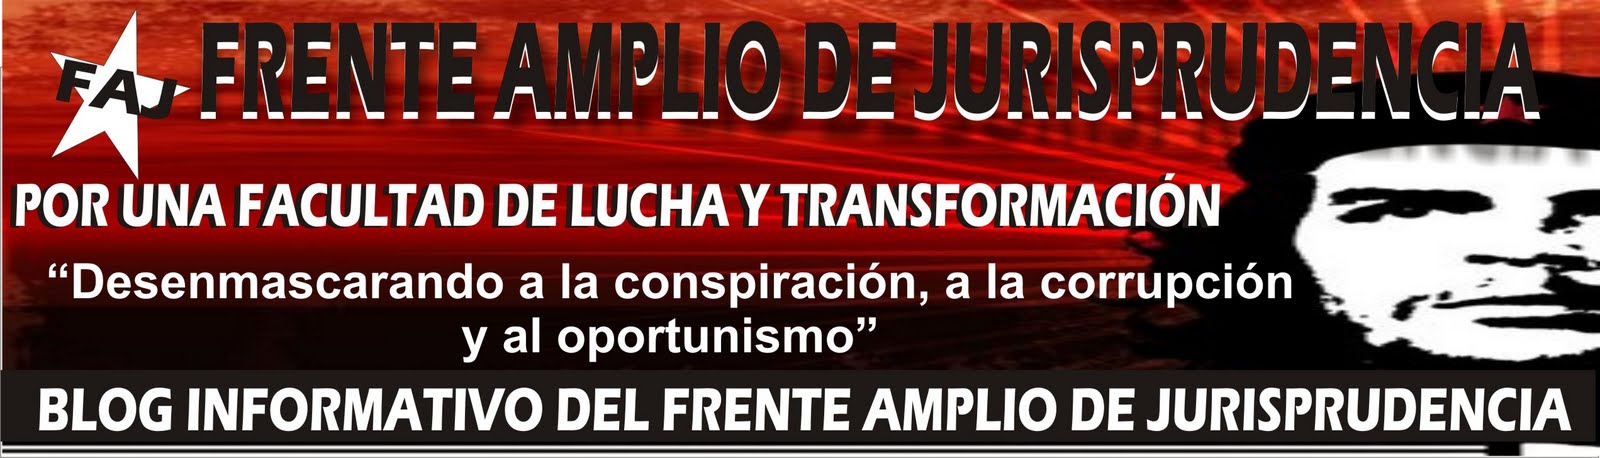 FRENTE AMPLIO DE JURISPRUDENCIA